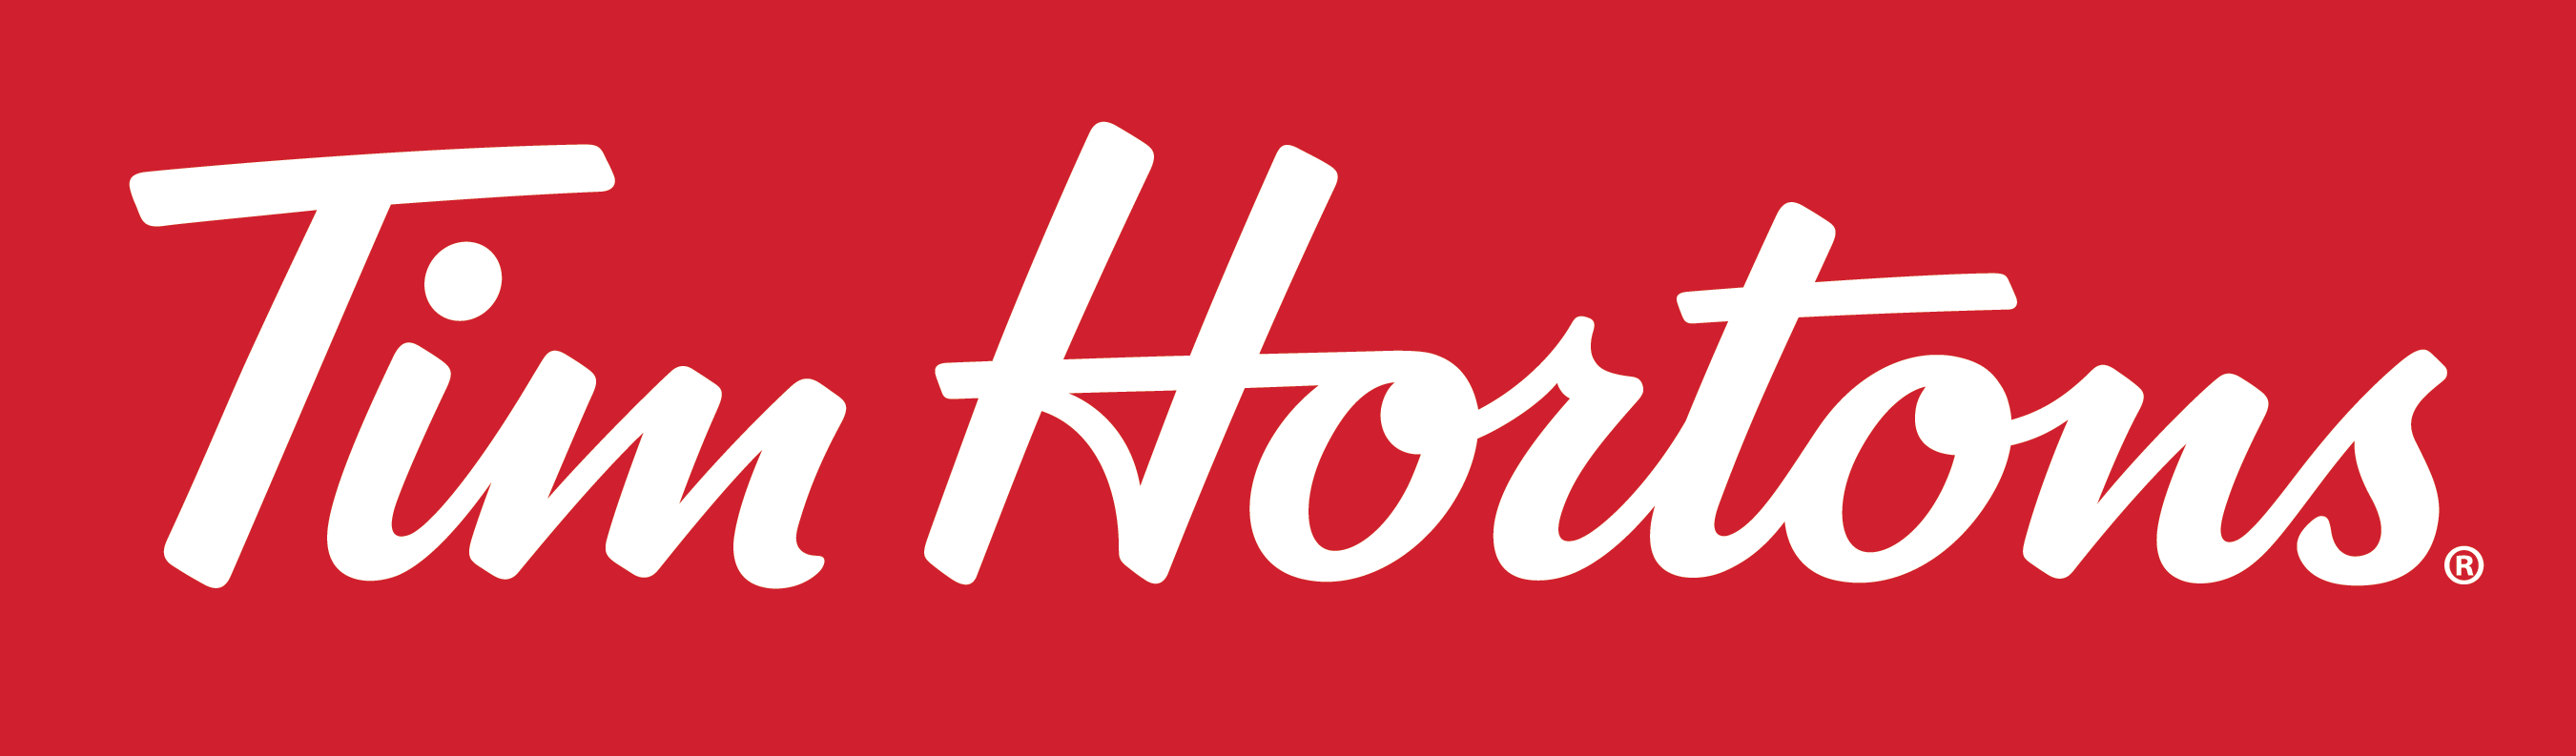 Brand: Tim Hortons